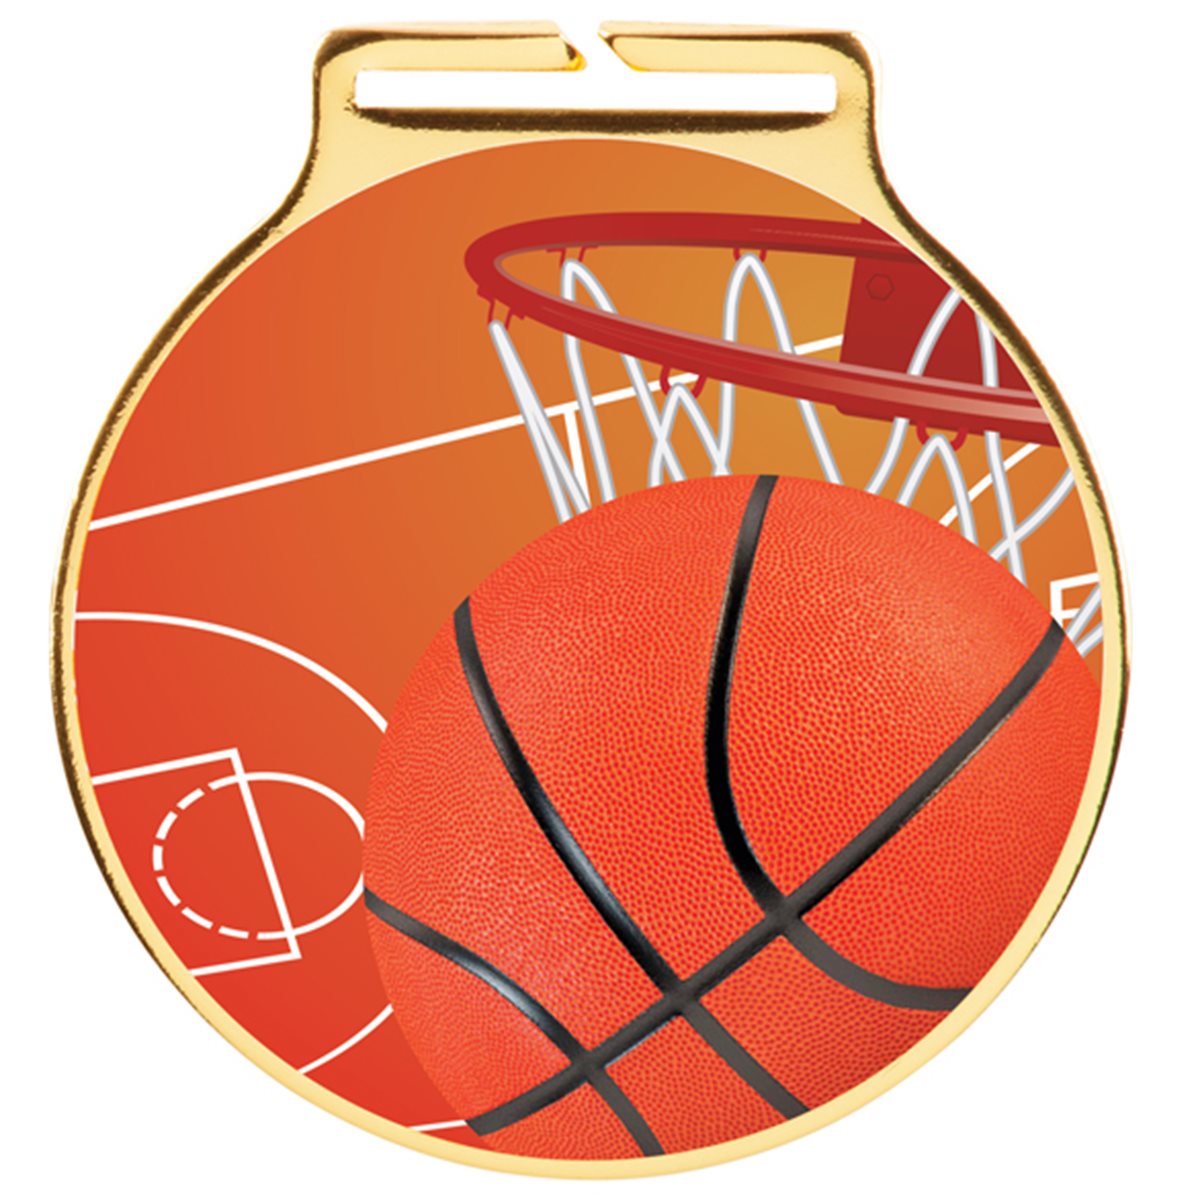 Gold Basketball Medal & Ribbon 60mm MM20471G